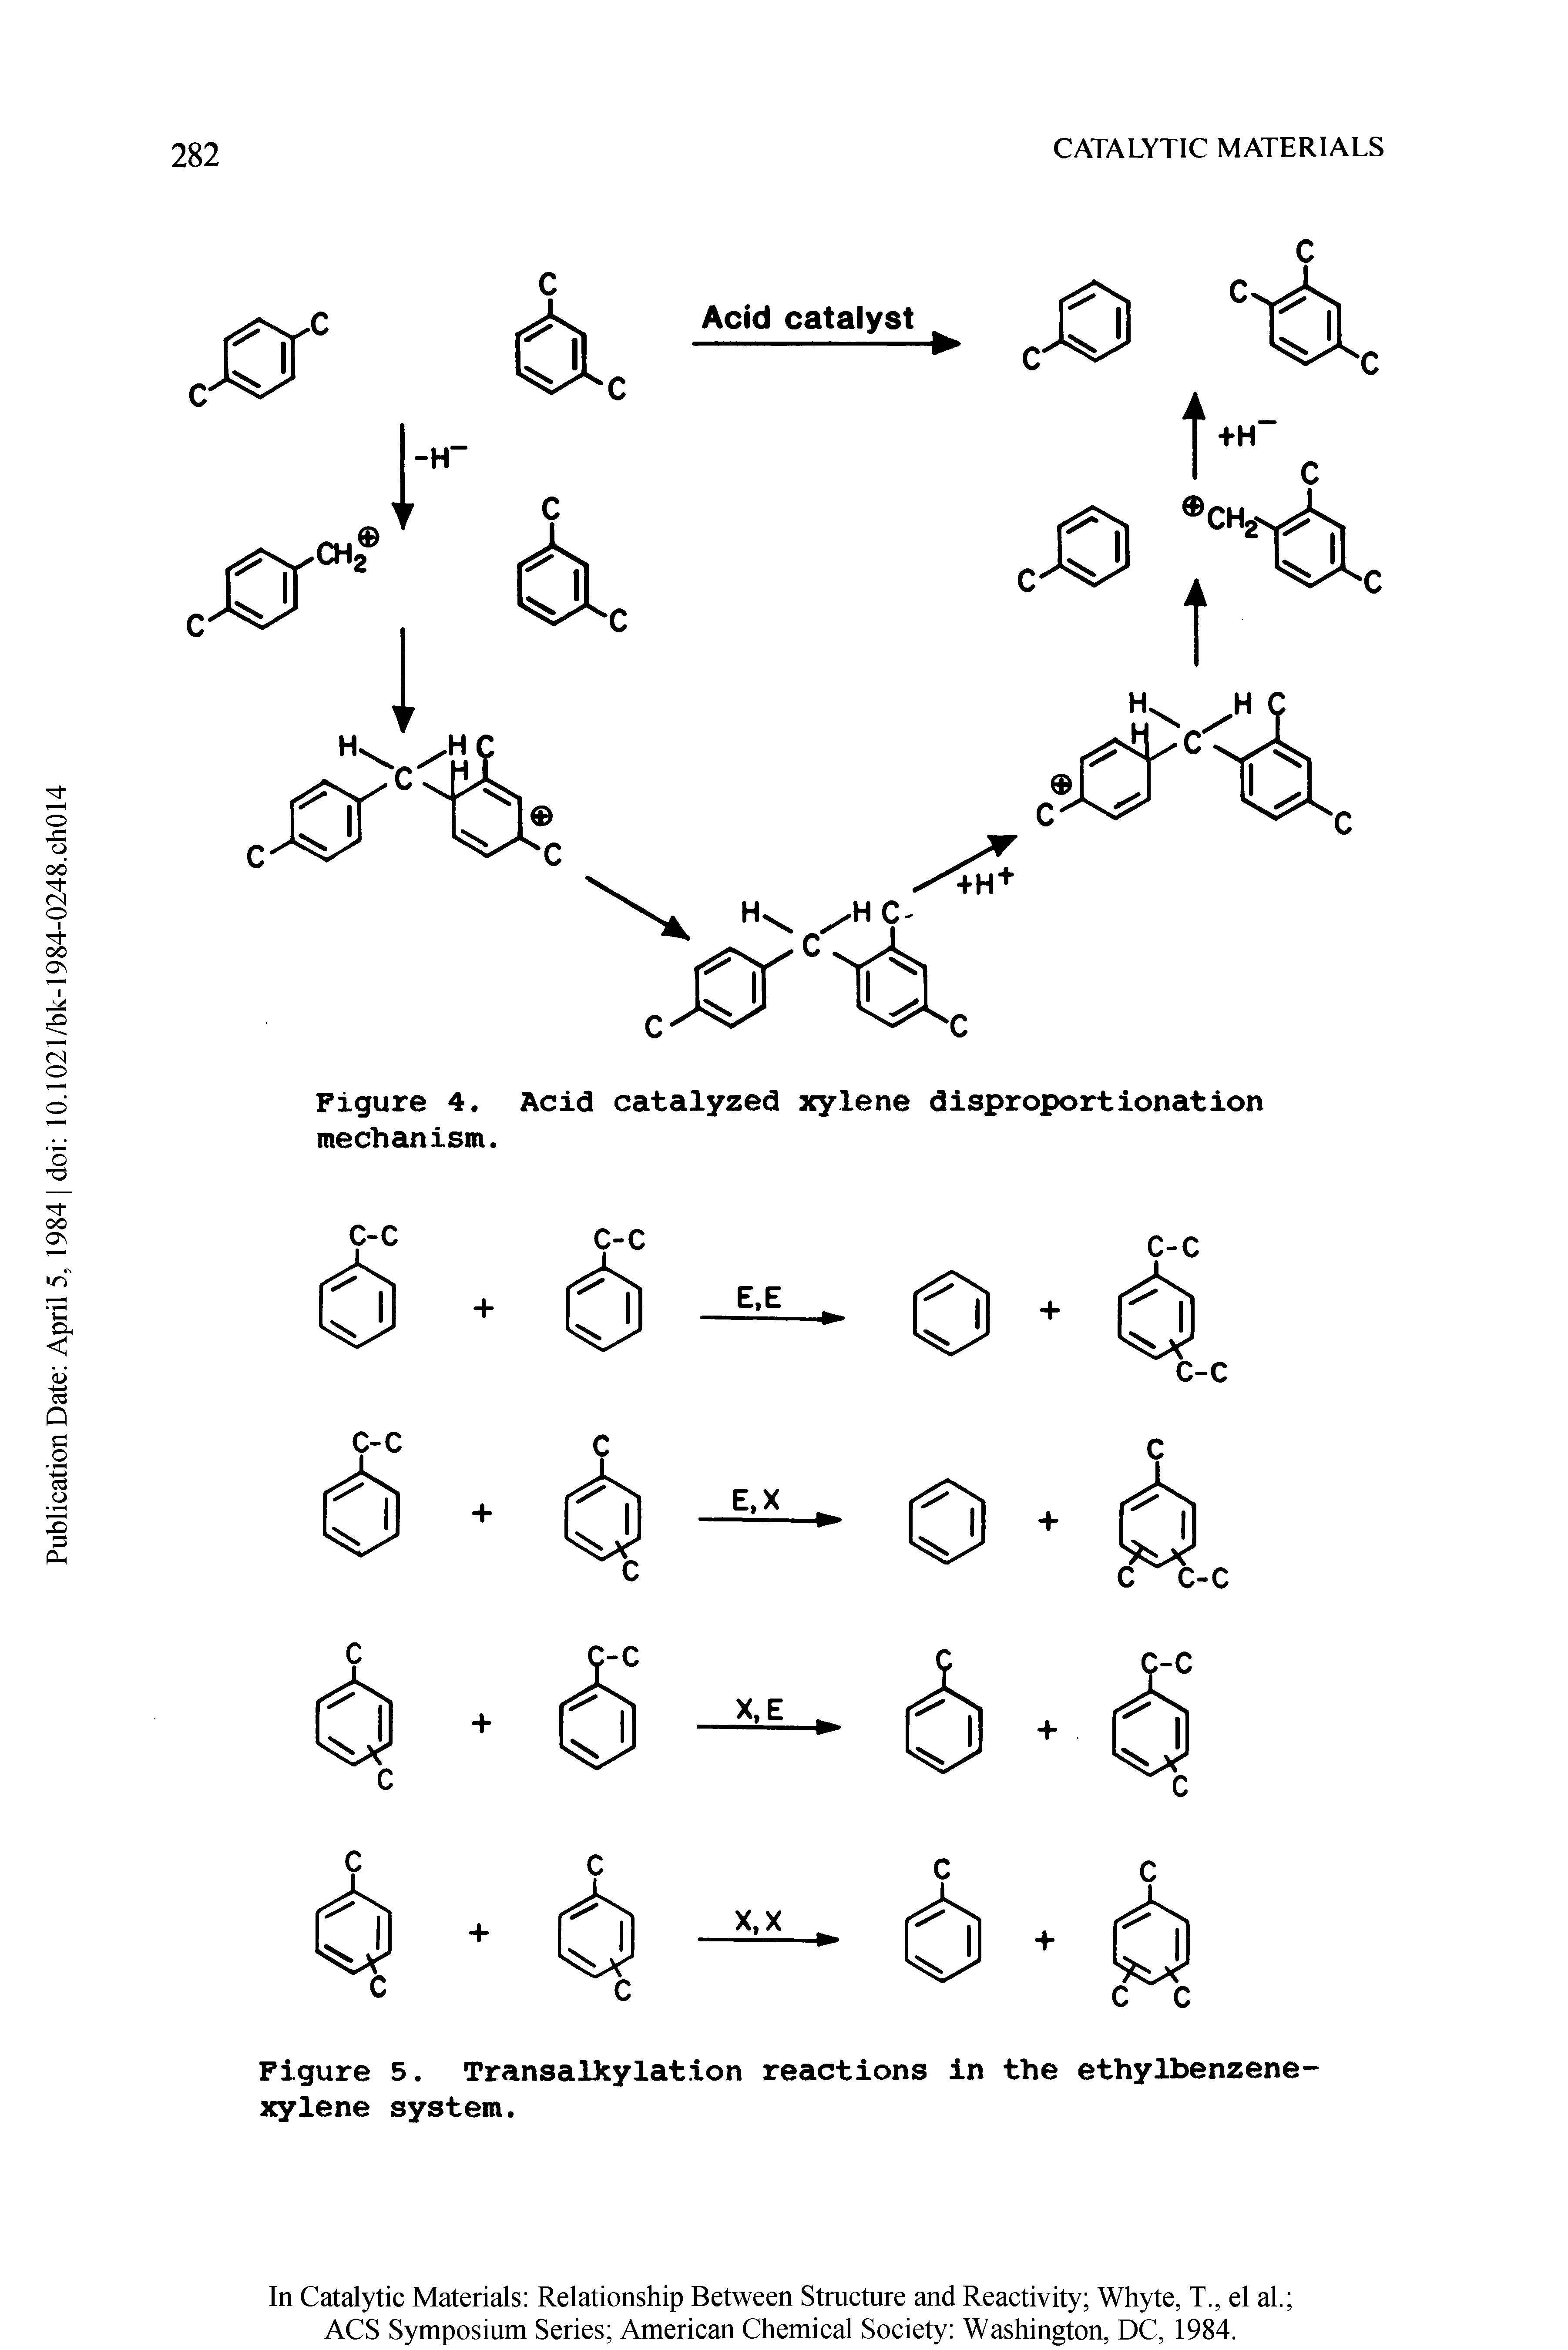 Figure 5. Transalkylation reactions in the ethylbenzene-xylene system.